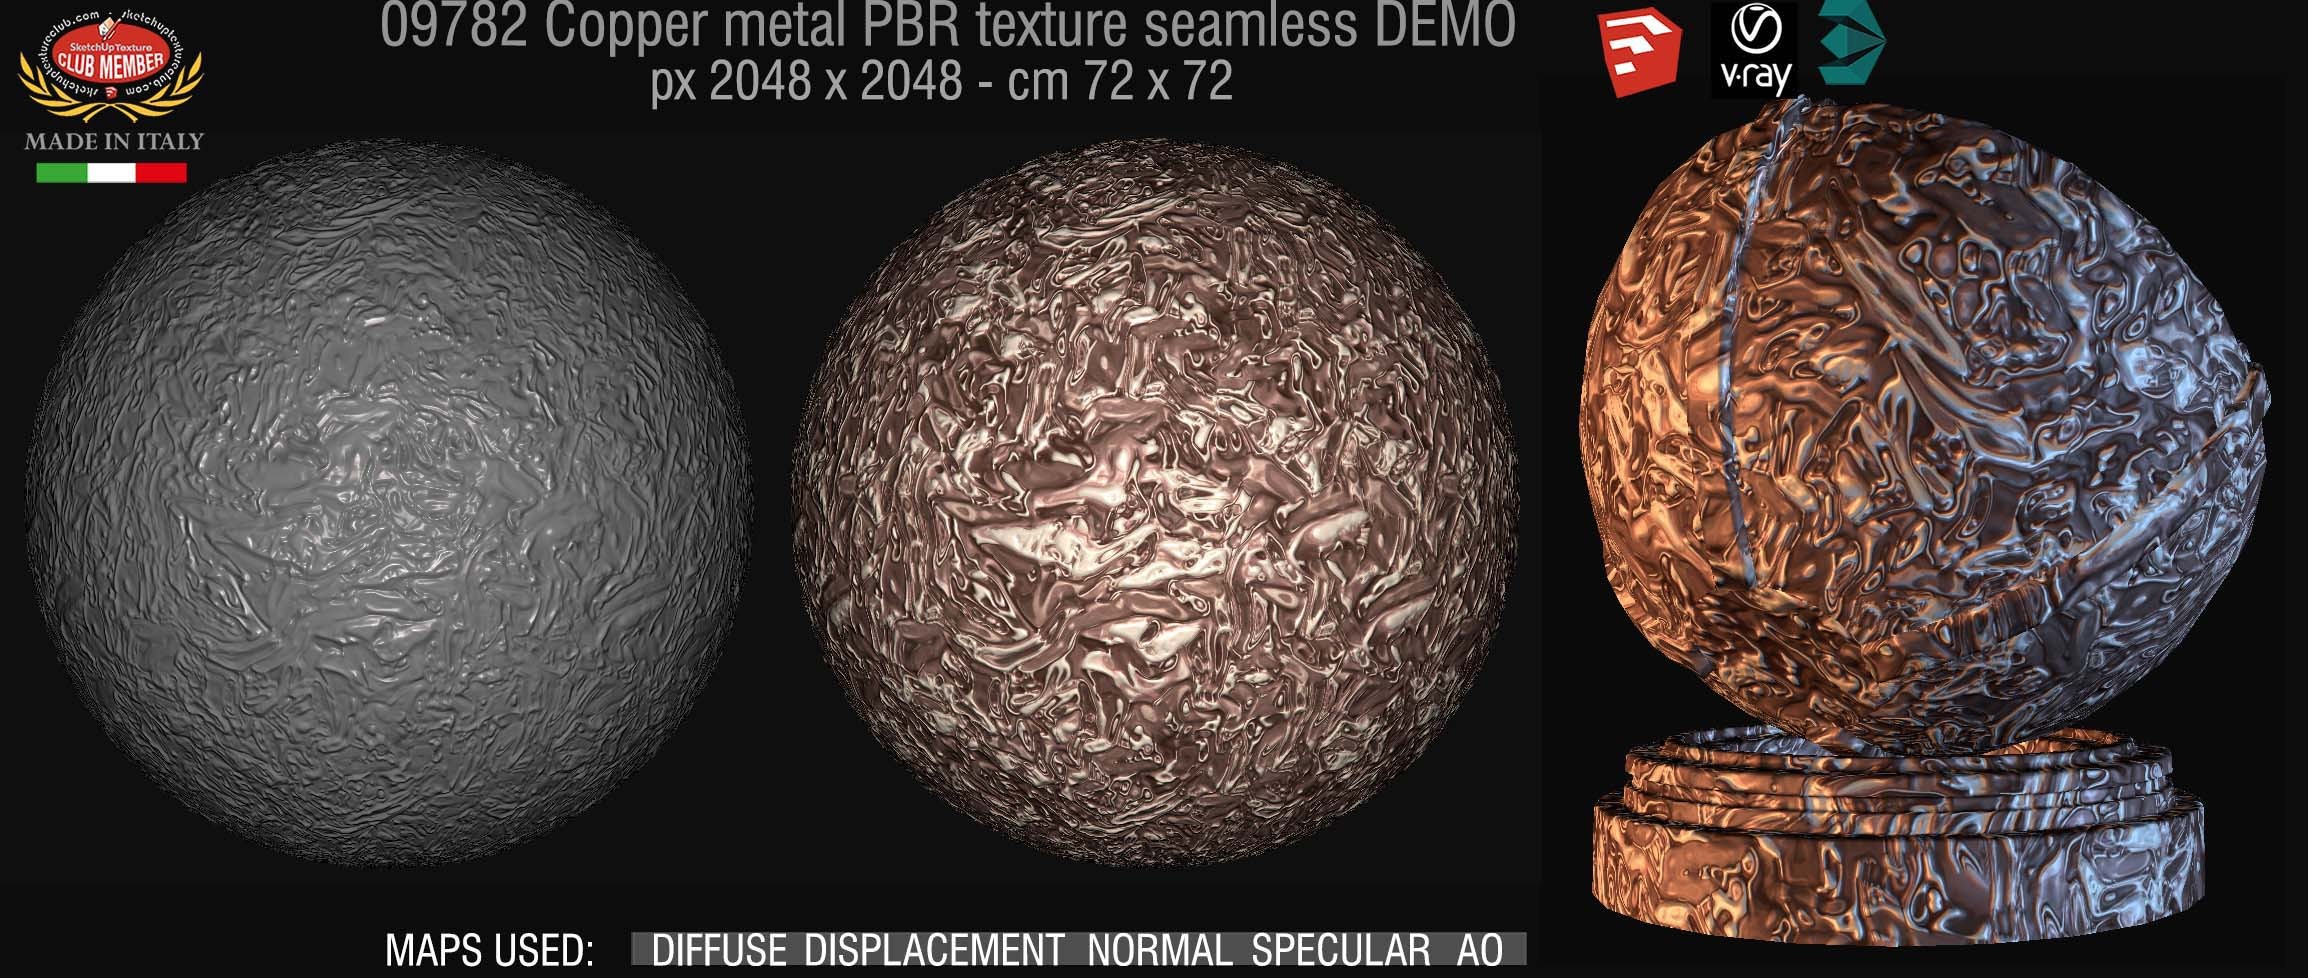 09782 Copper metal PBR texture seamless DEMO